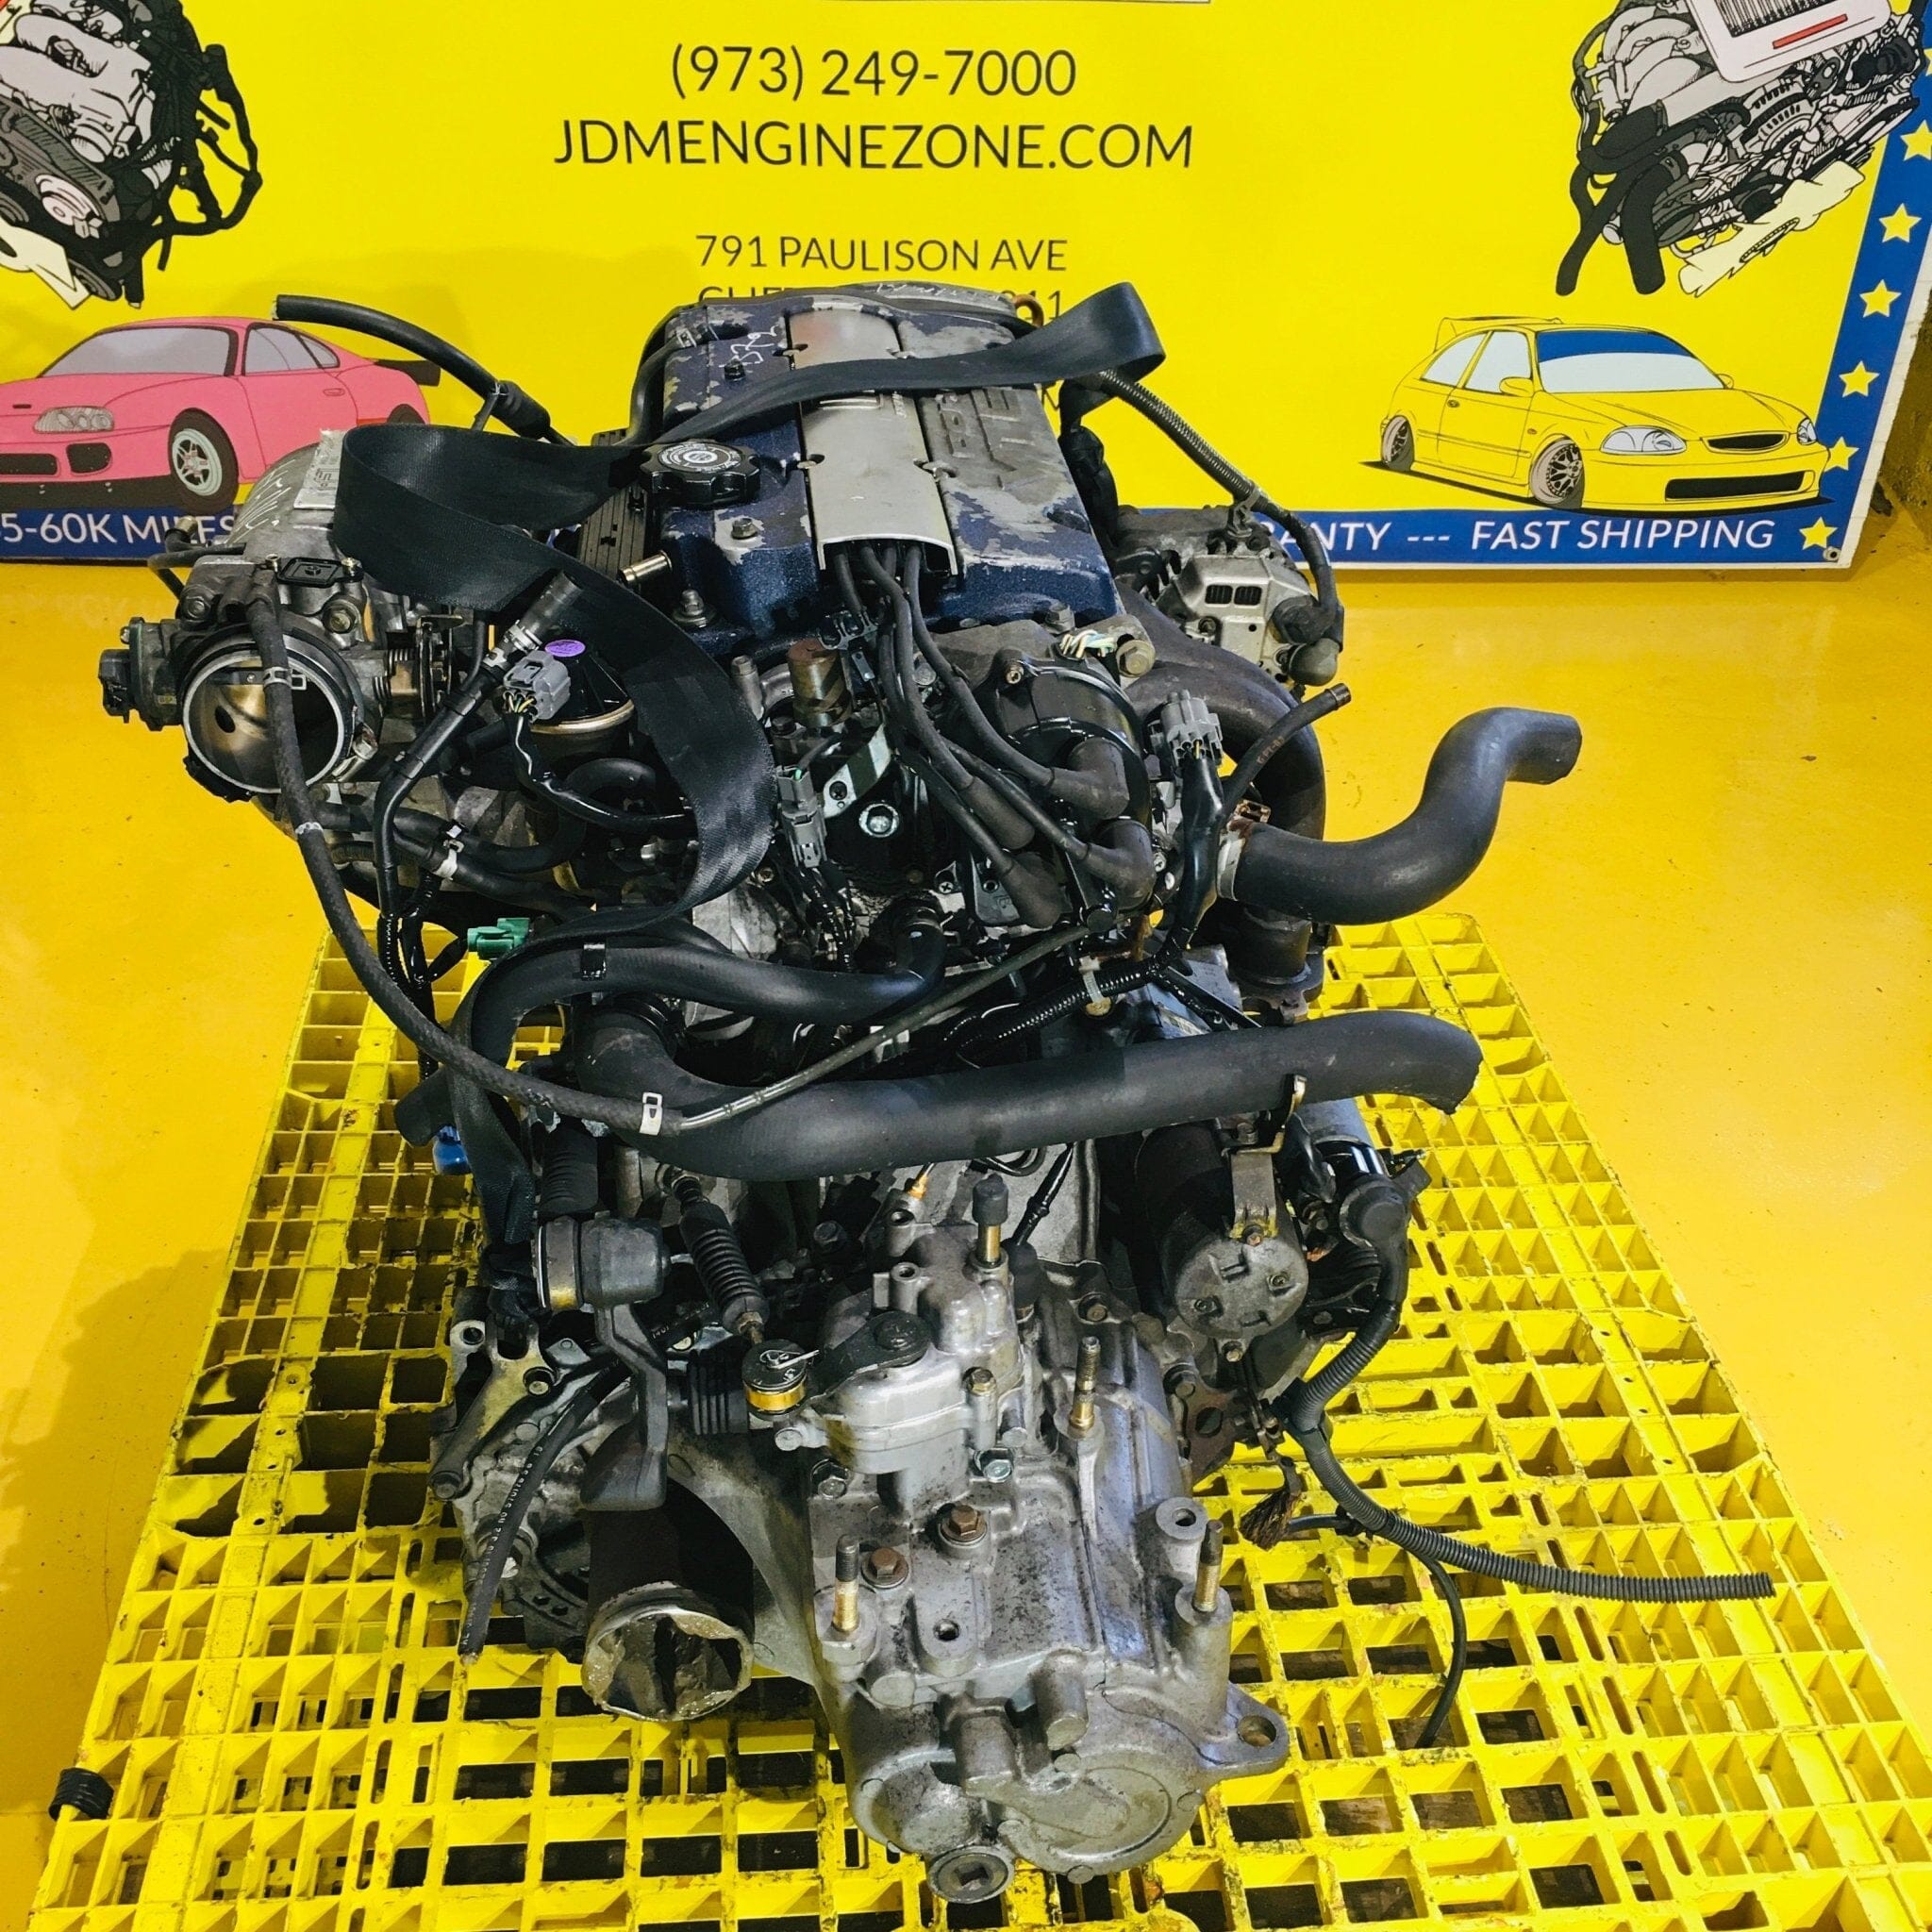 Honda Prelude Accord 1998-2002 2.0L Dohc Vtec JDM Engine Manual Full Swap - F20b Blue Top